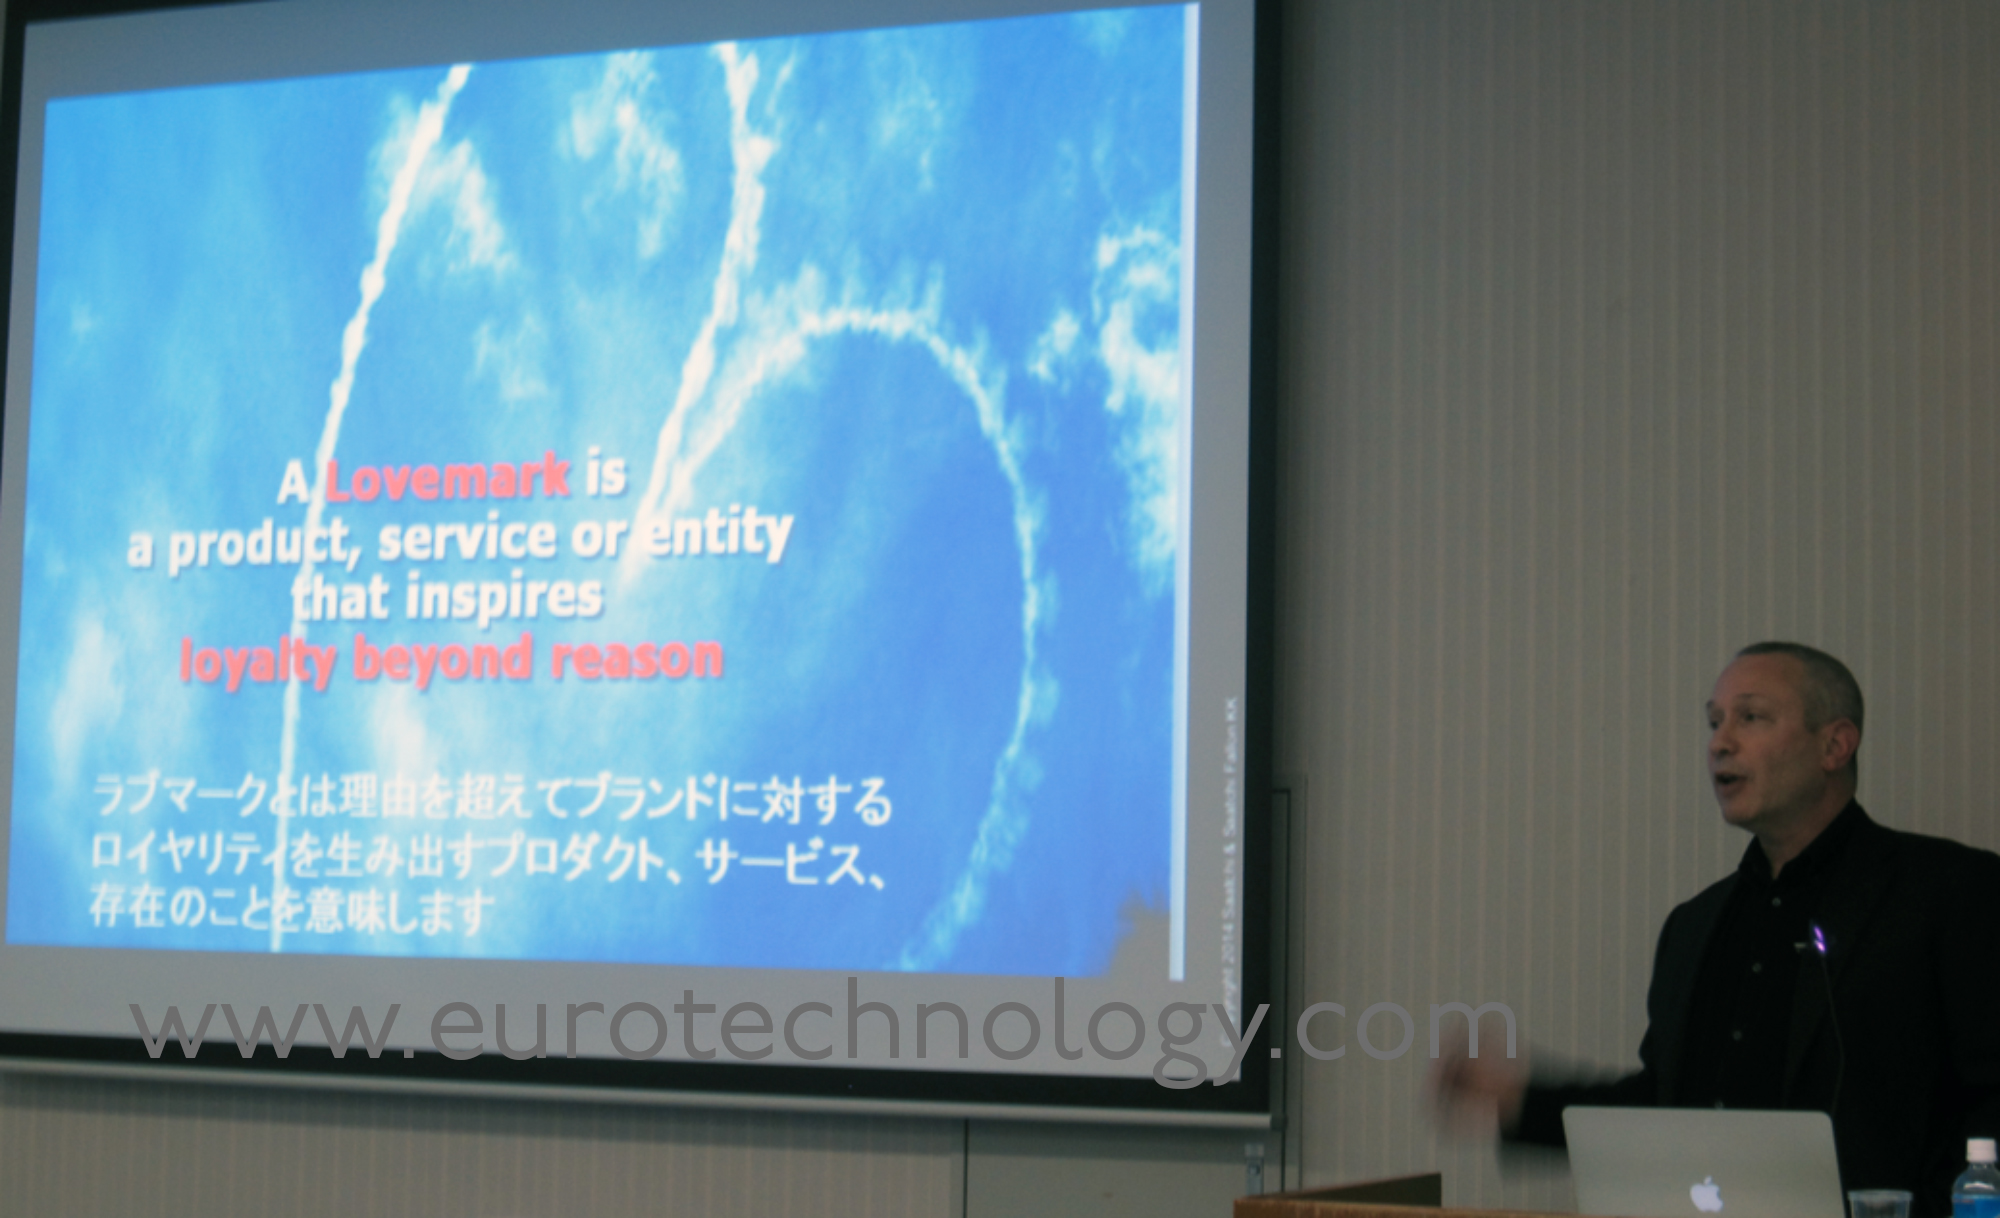 Japan brand management: Saatchi & Saatchi Japan CEO Philip Rubel talks about Lovemarks in Japan